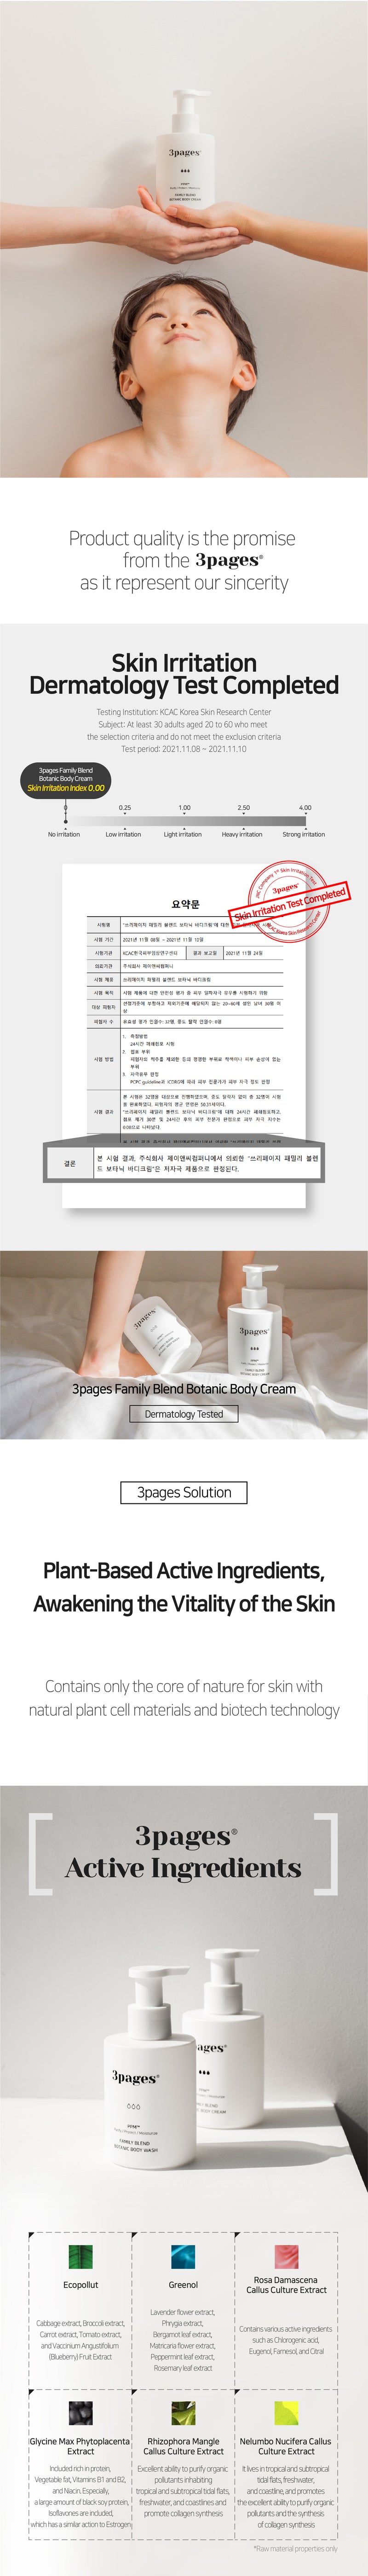 [10% off] 3pages® Premium Family Blend Botanic Body Cream (400ml/14.1oz)